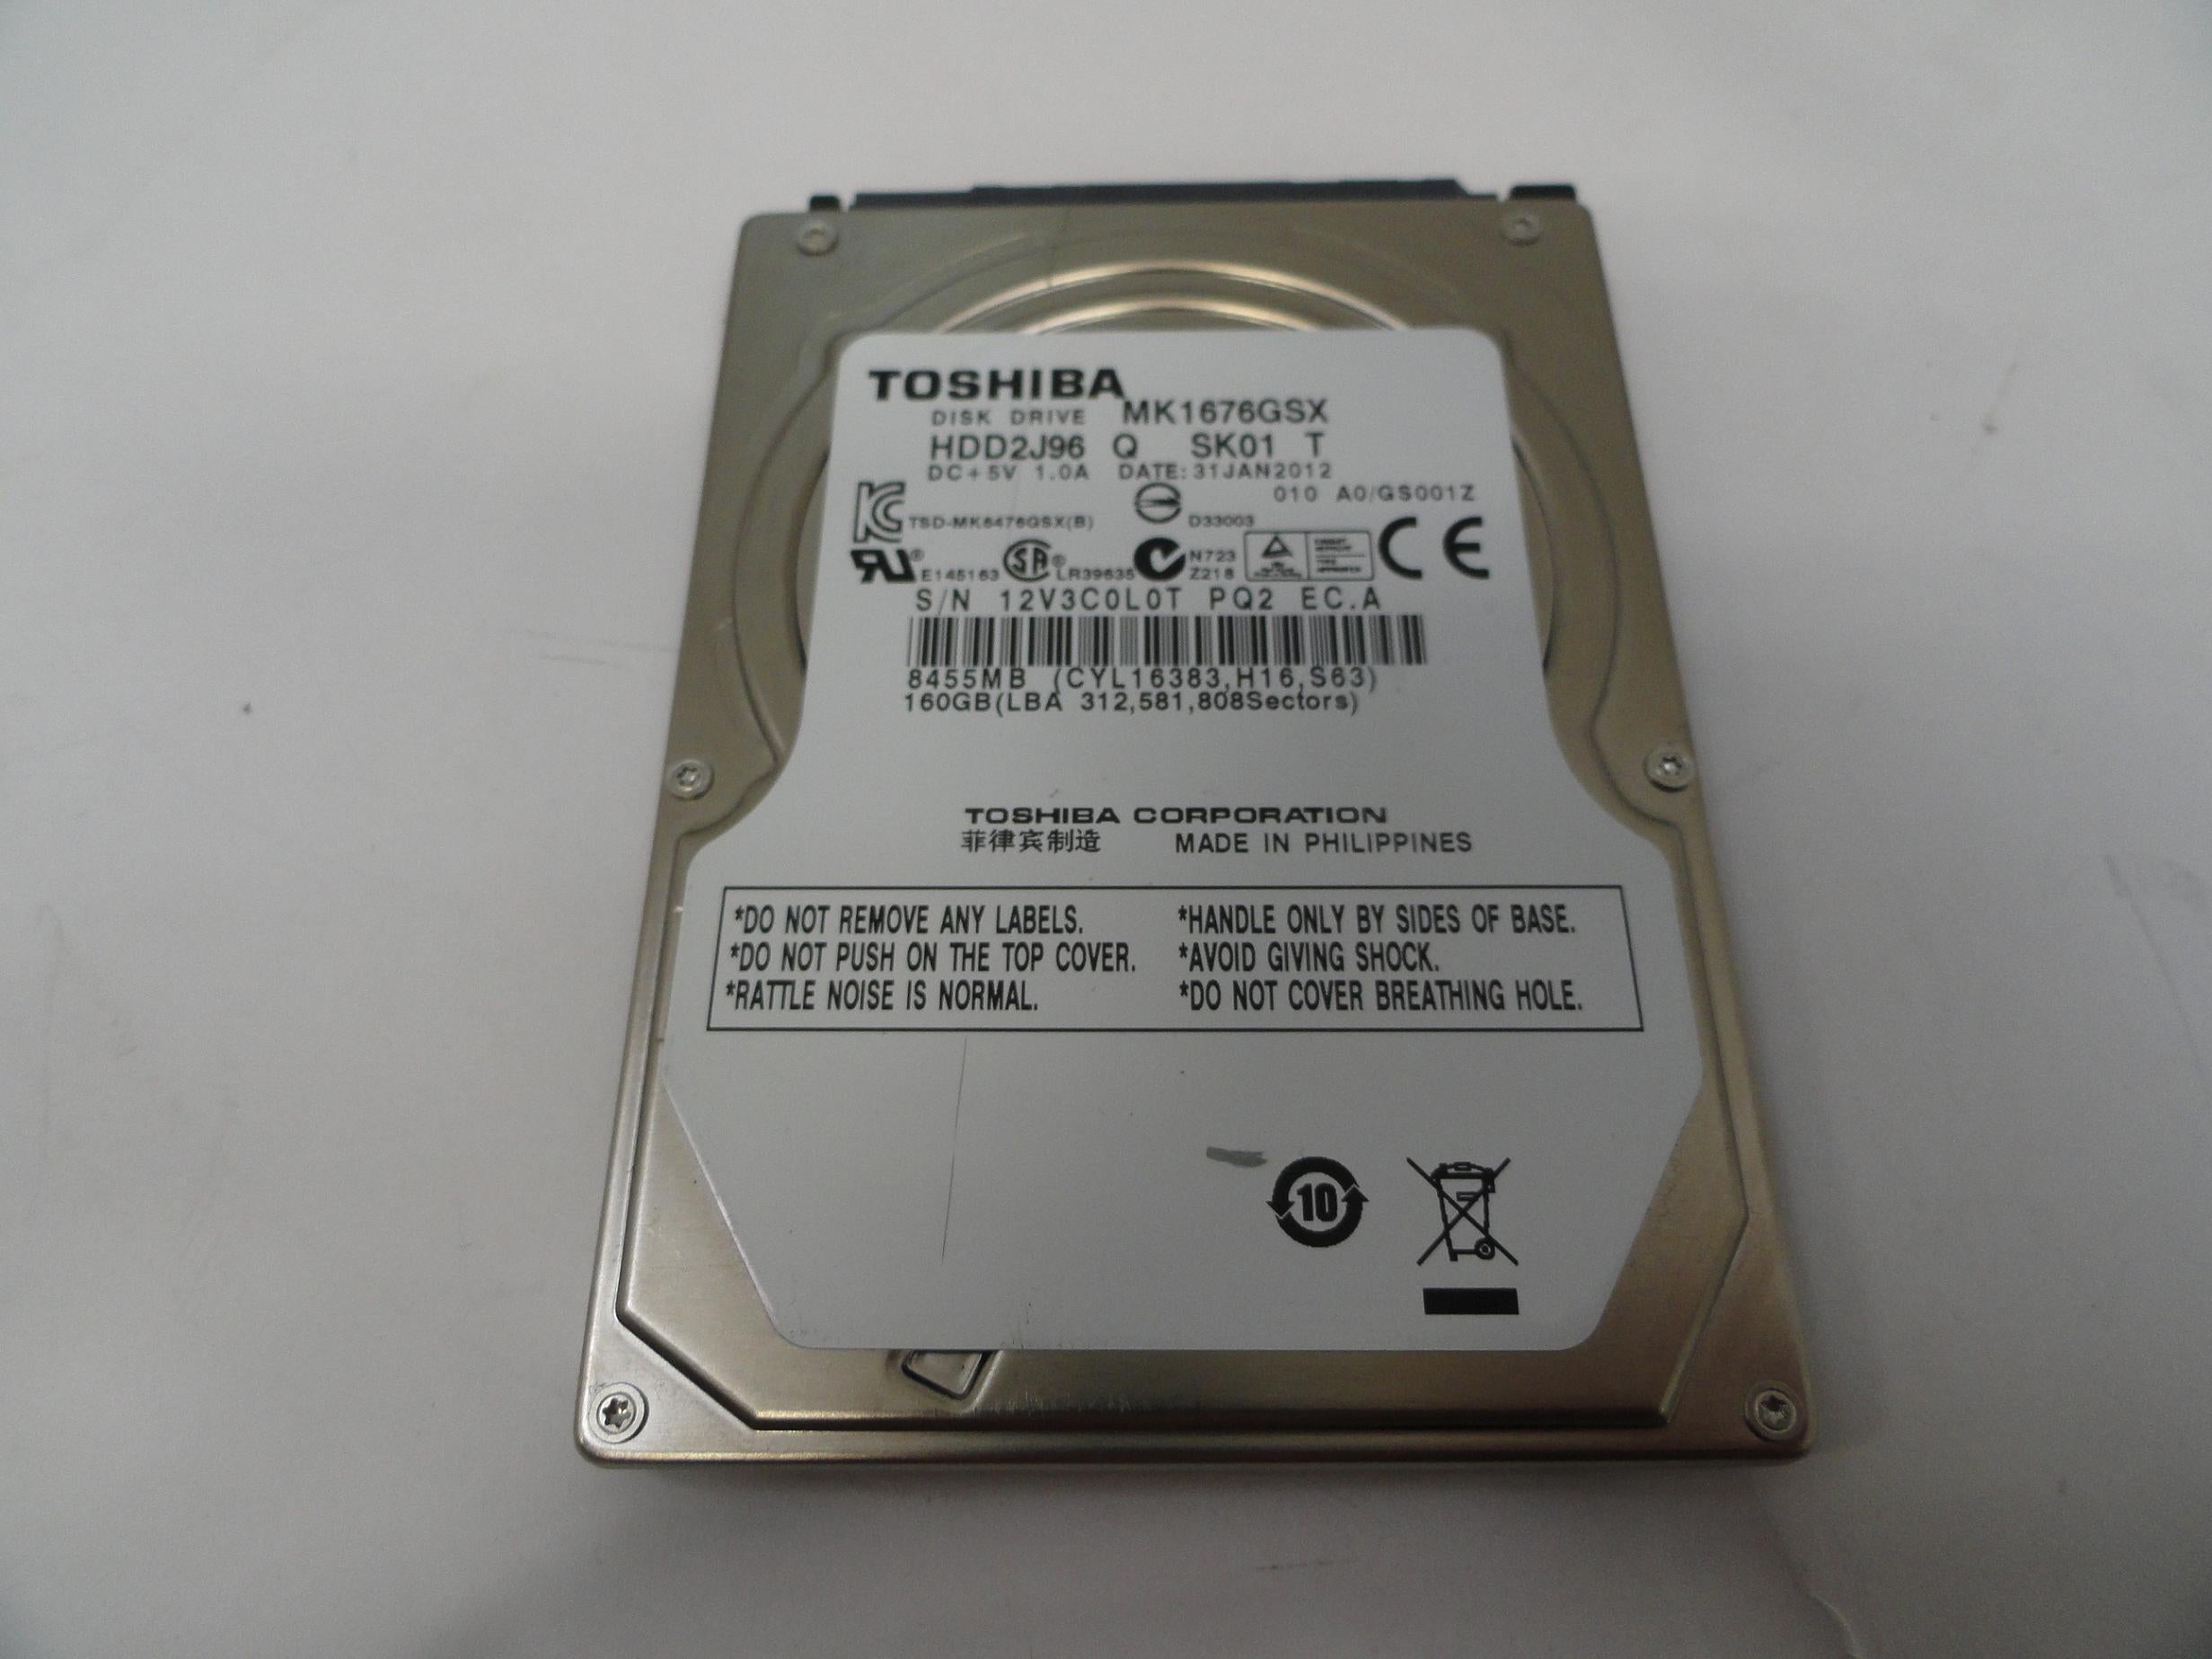 PR16414_HDD2J96_Toshiba 160Gb SATA 5400rpm 2.5in HDD - Image3